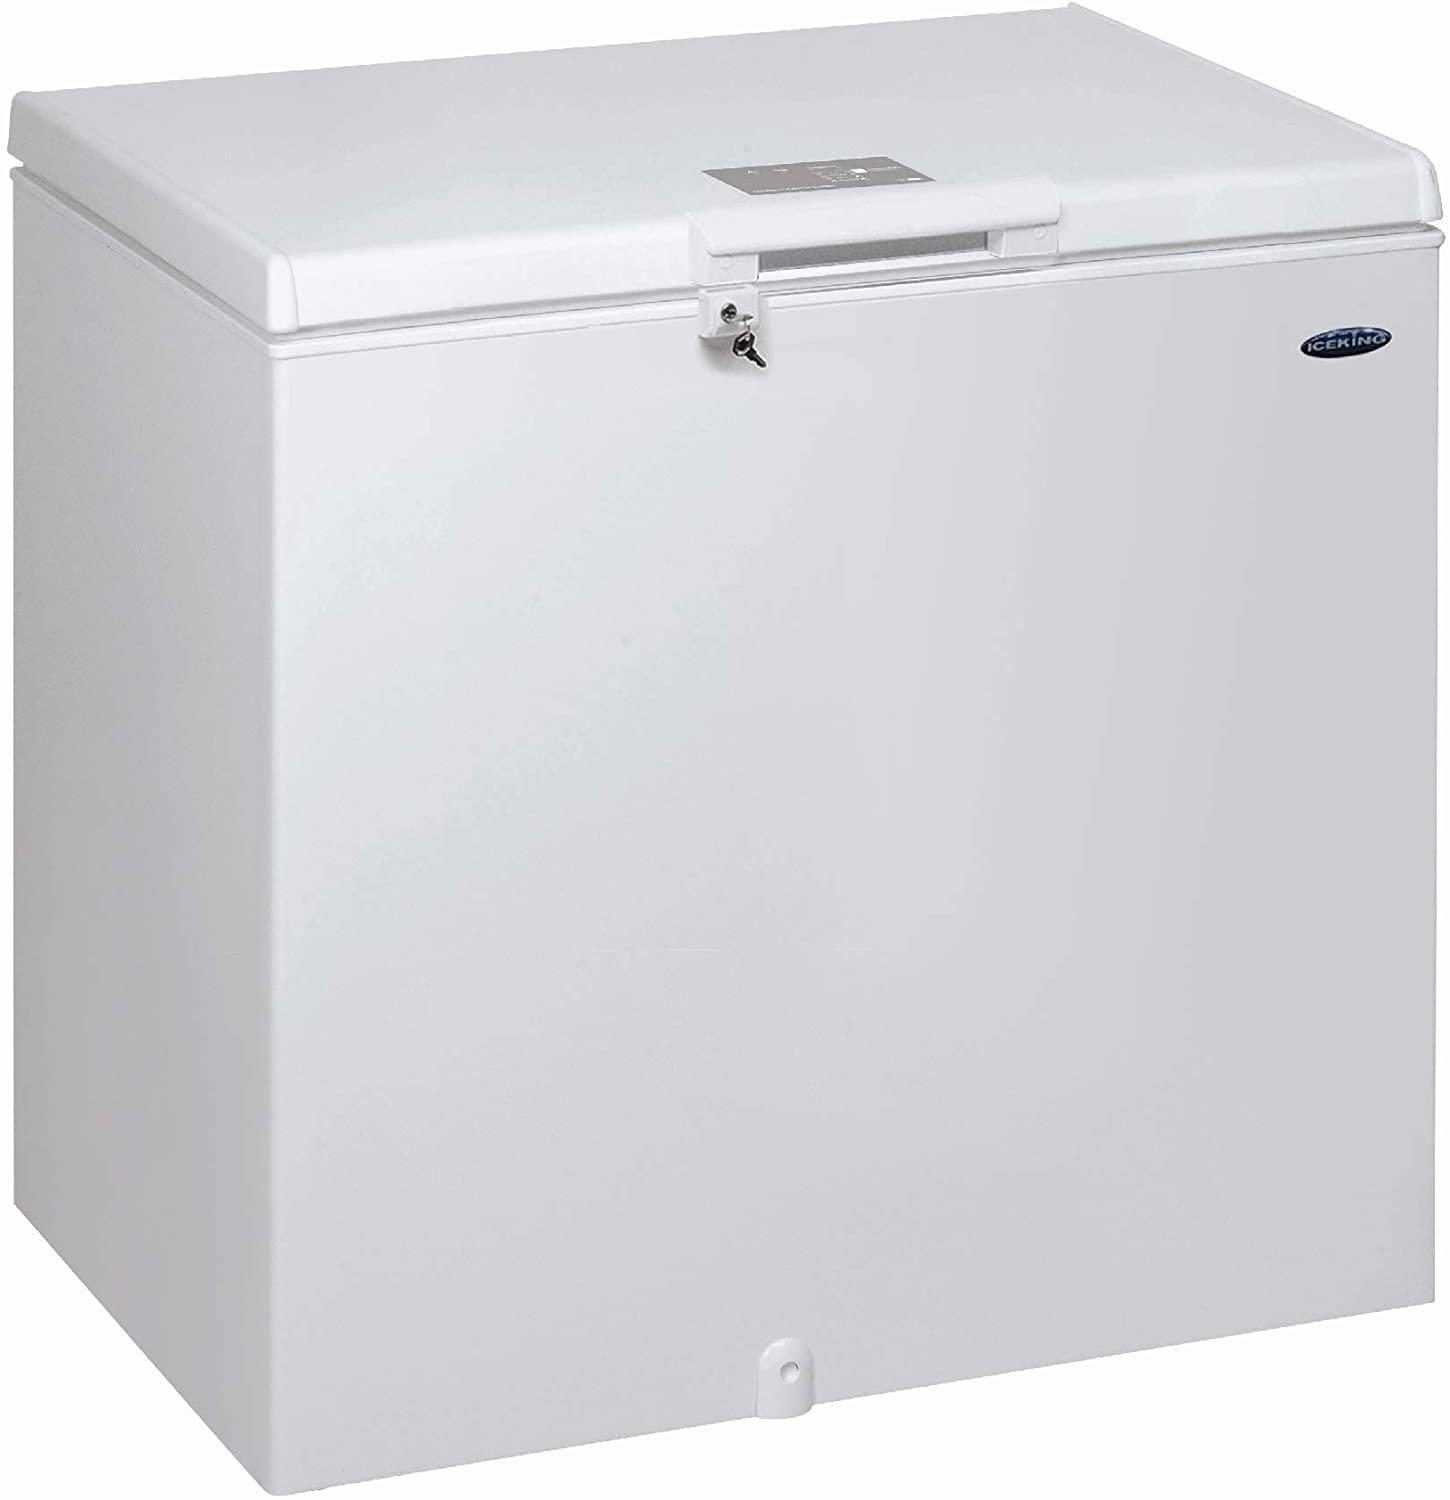 Statesman CHF151 Chest Freezer 142Ltr White (H)850 mm x (W)705 mm x (D)554 mm, Weight 31KG 